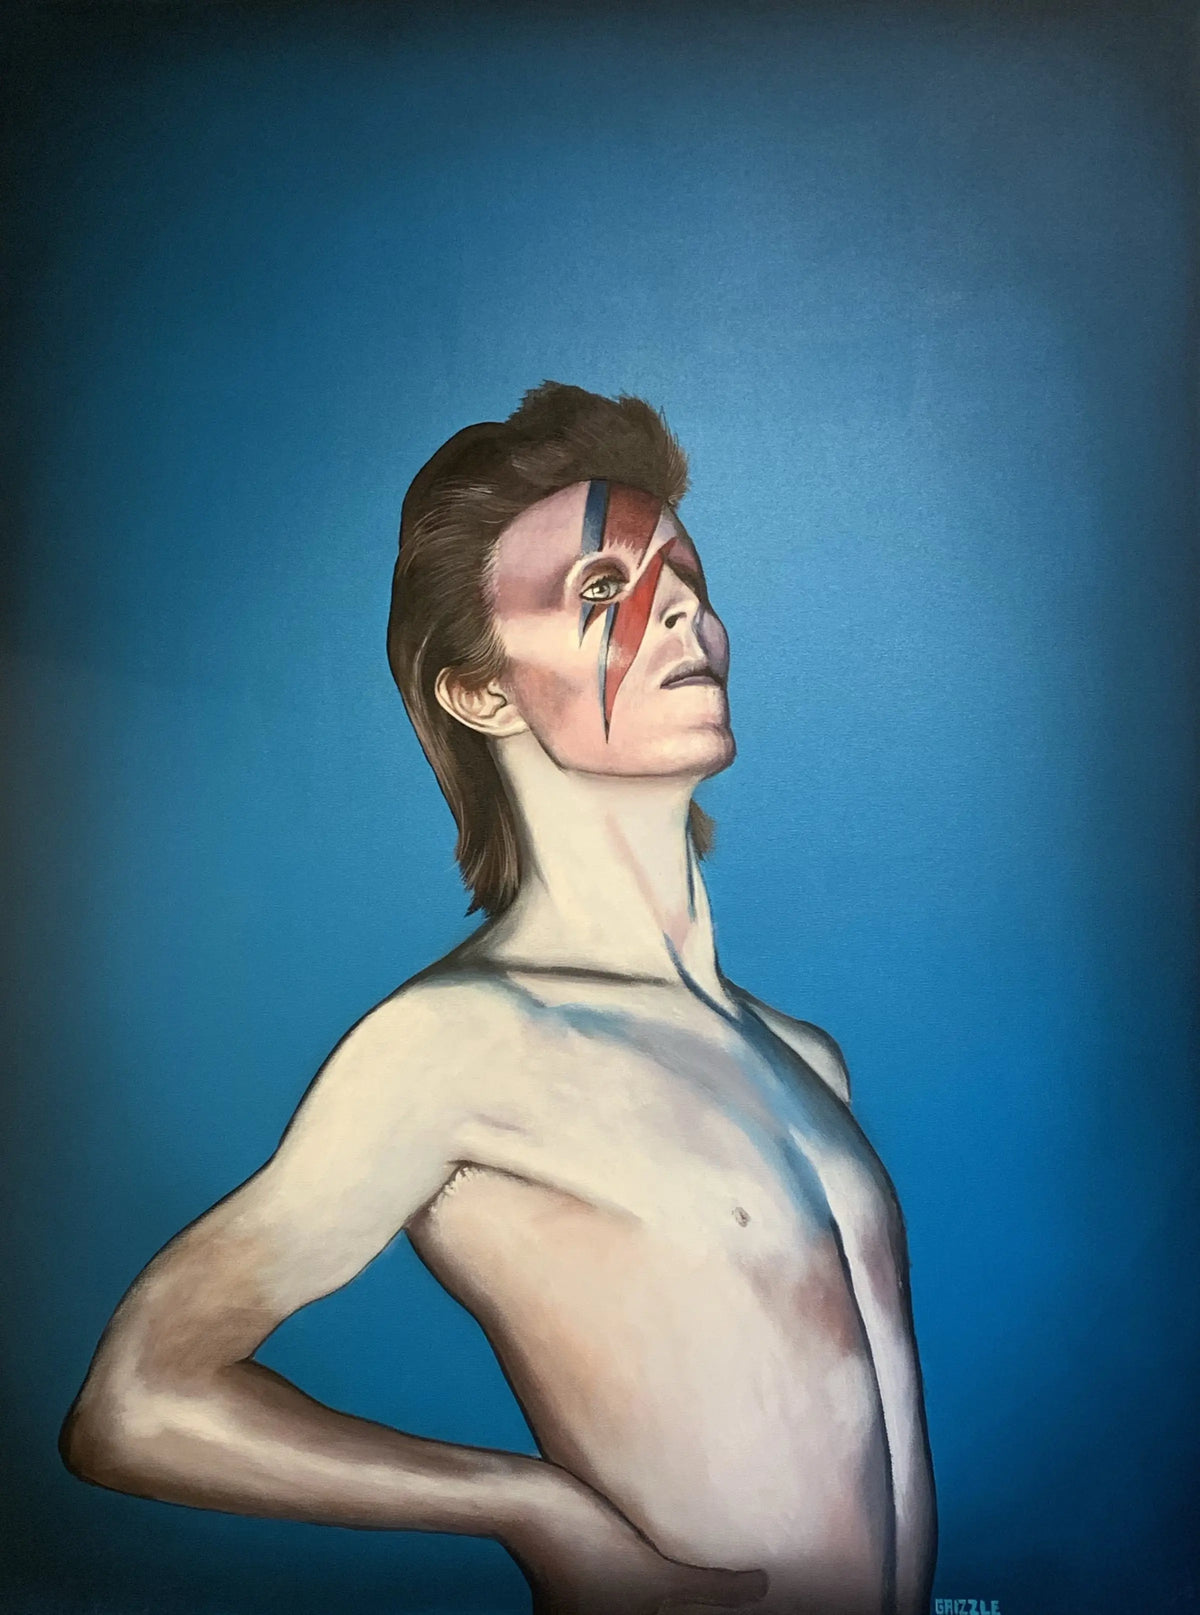 David Bowie - Squash Blossom Vail